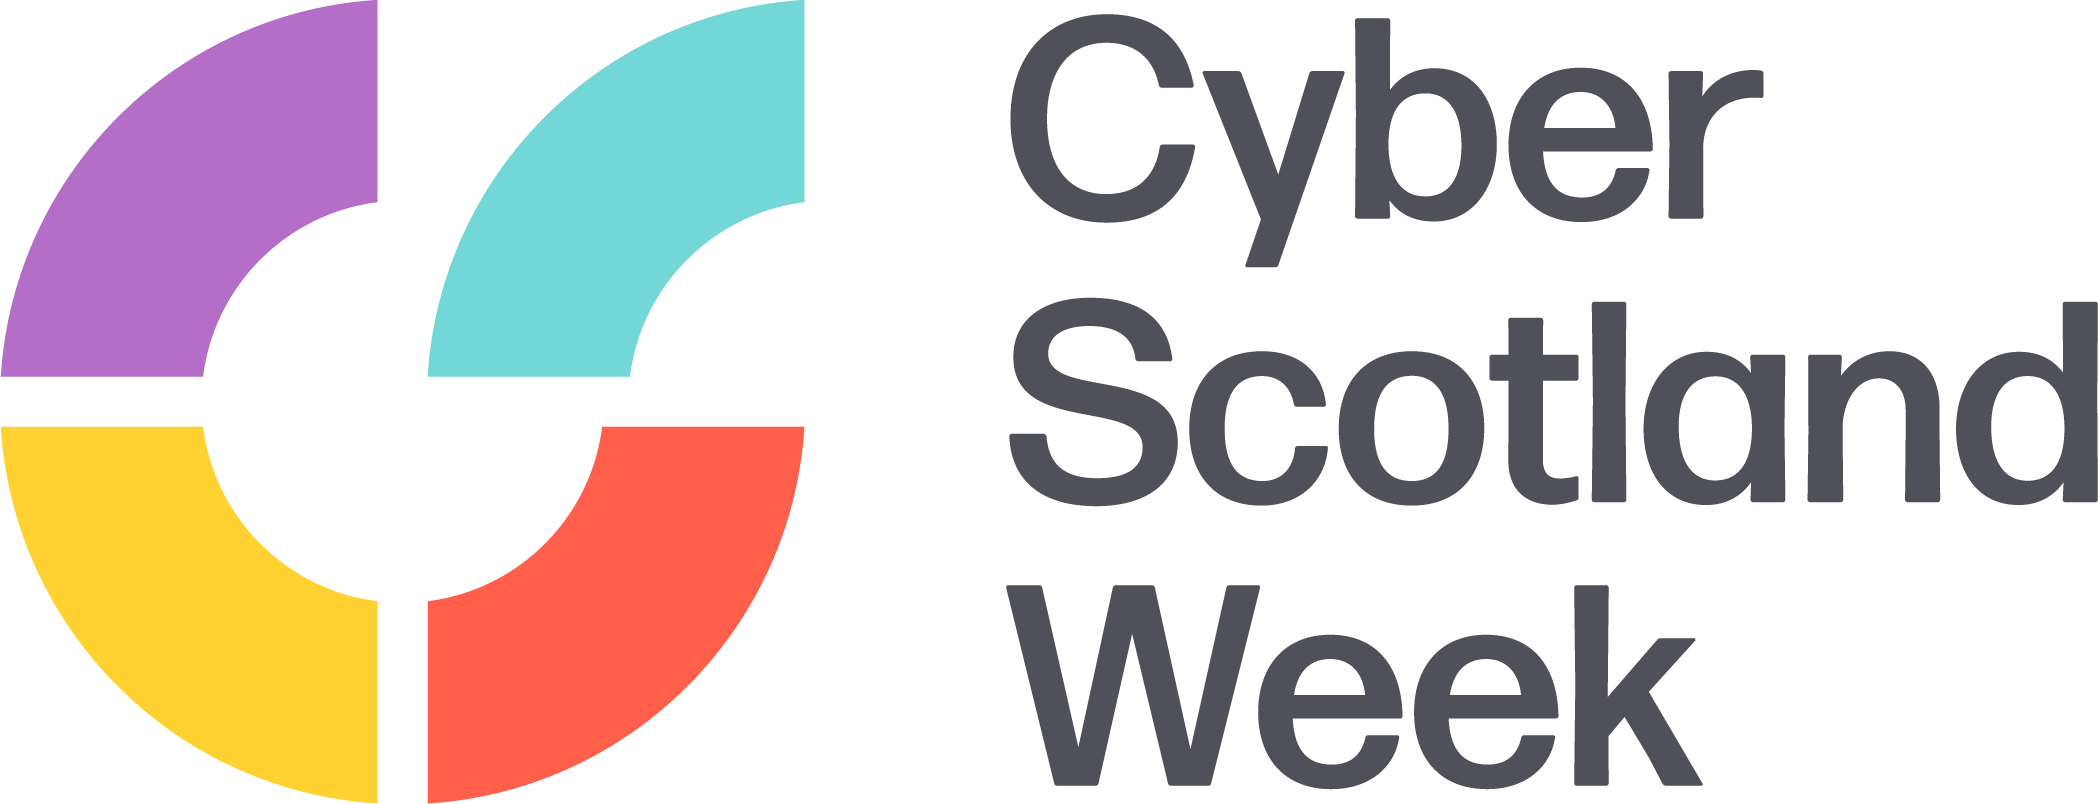 CyberScotlandWeek_Logo@2x.png